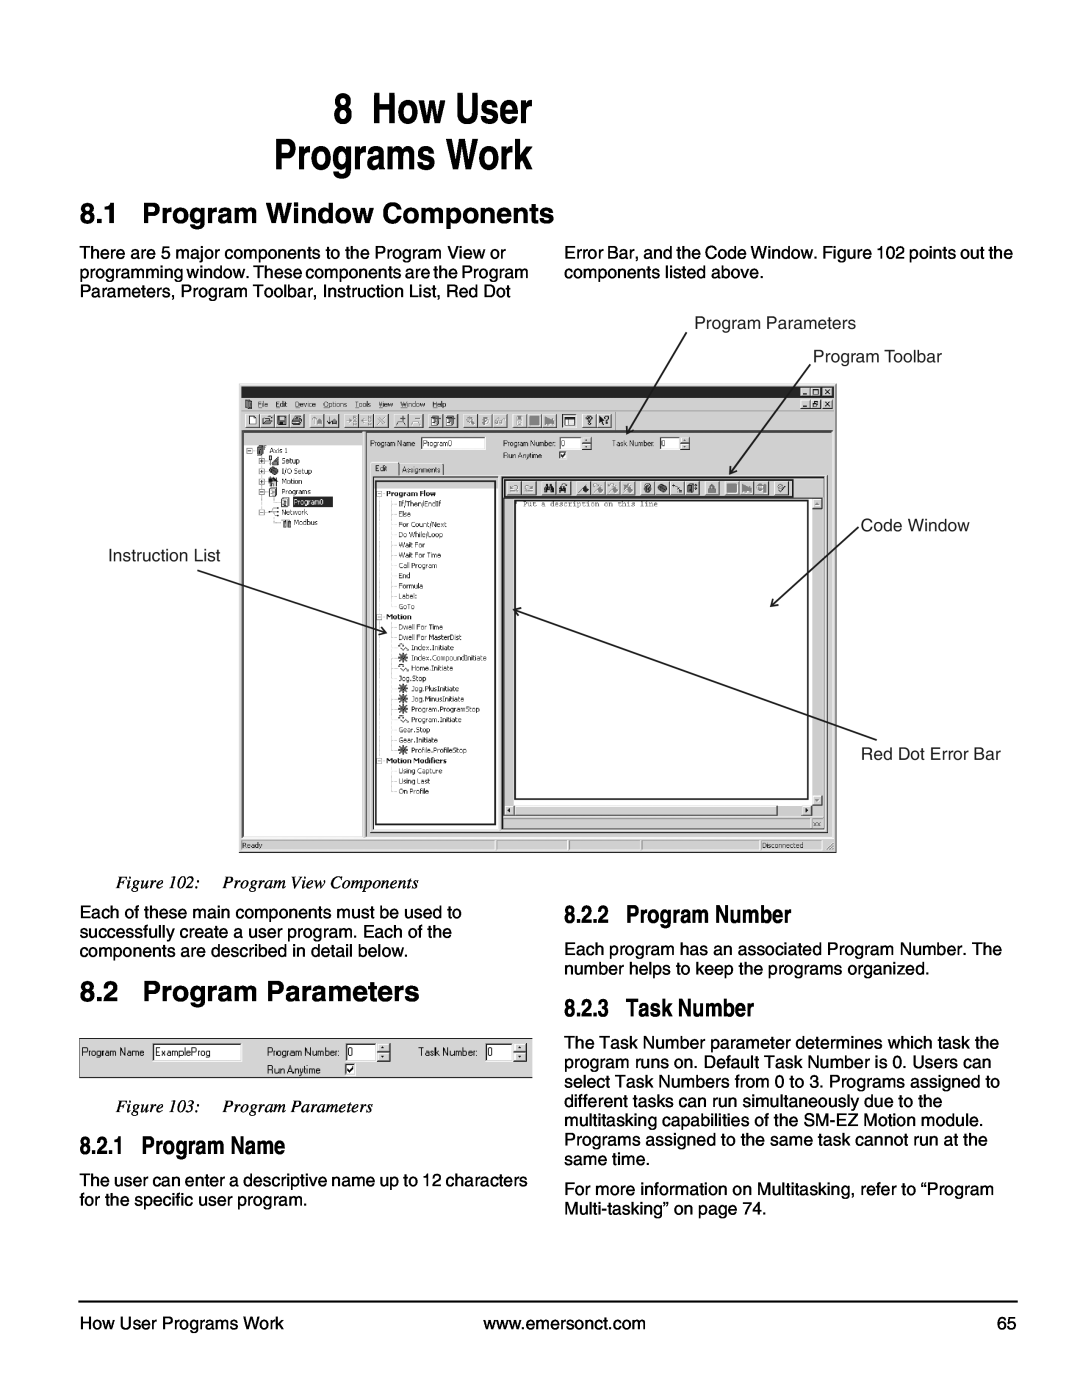 Emerson P/N 400361-00 How User, Programs Work, Program Window Components, Program Parameters, Program Name, Program Number 